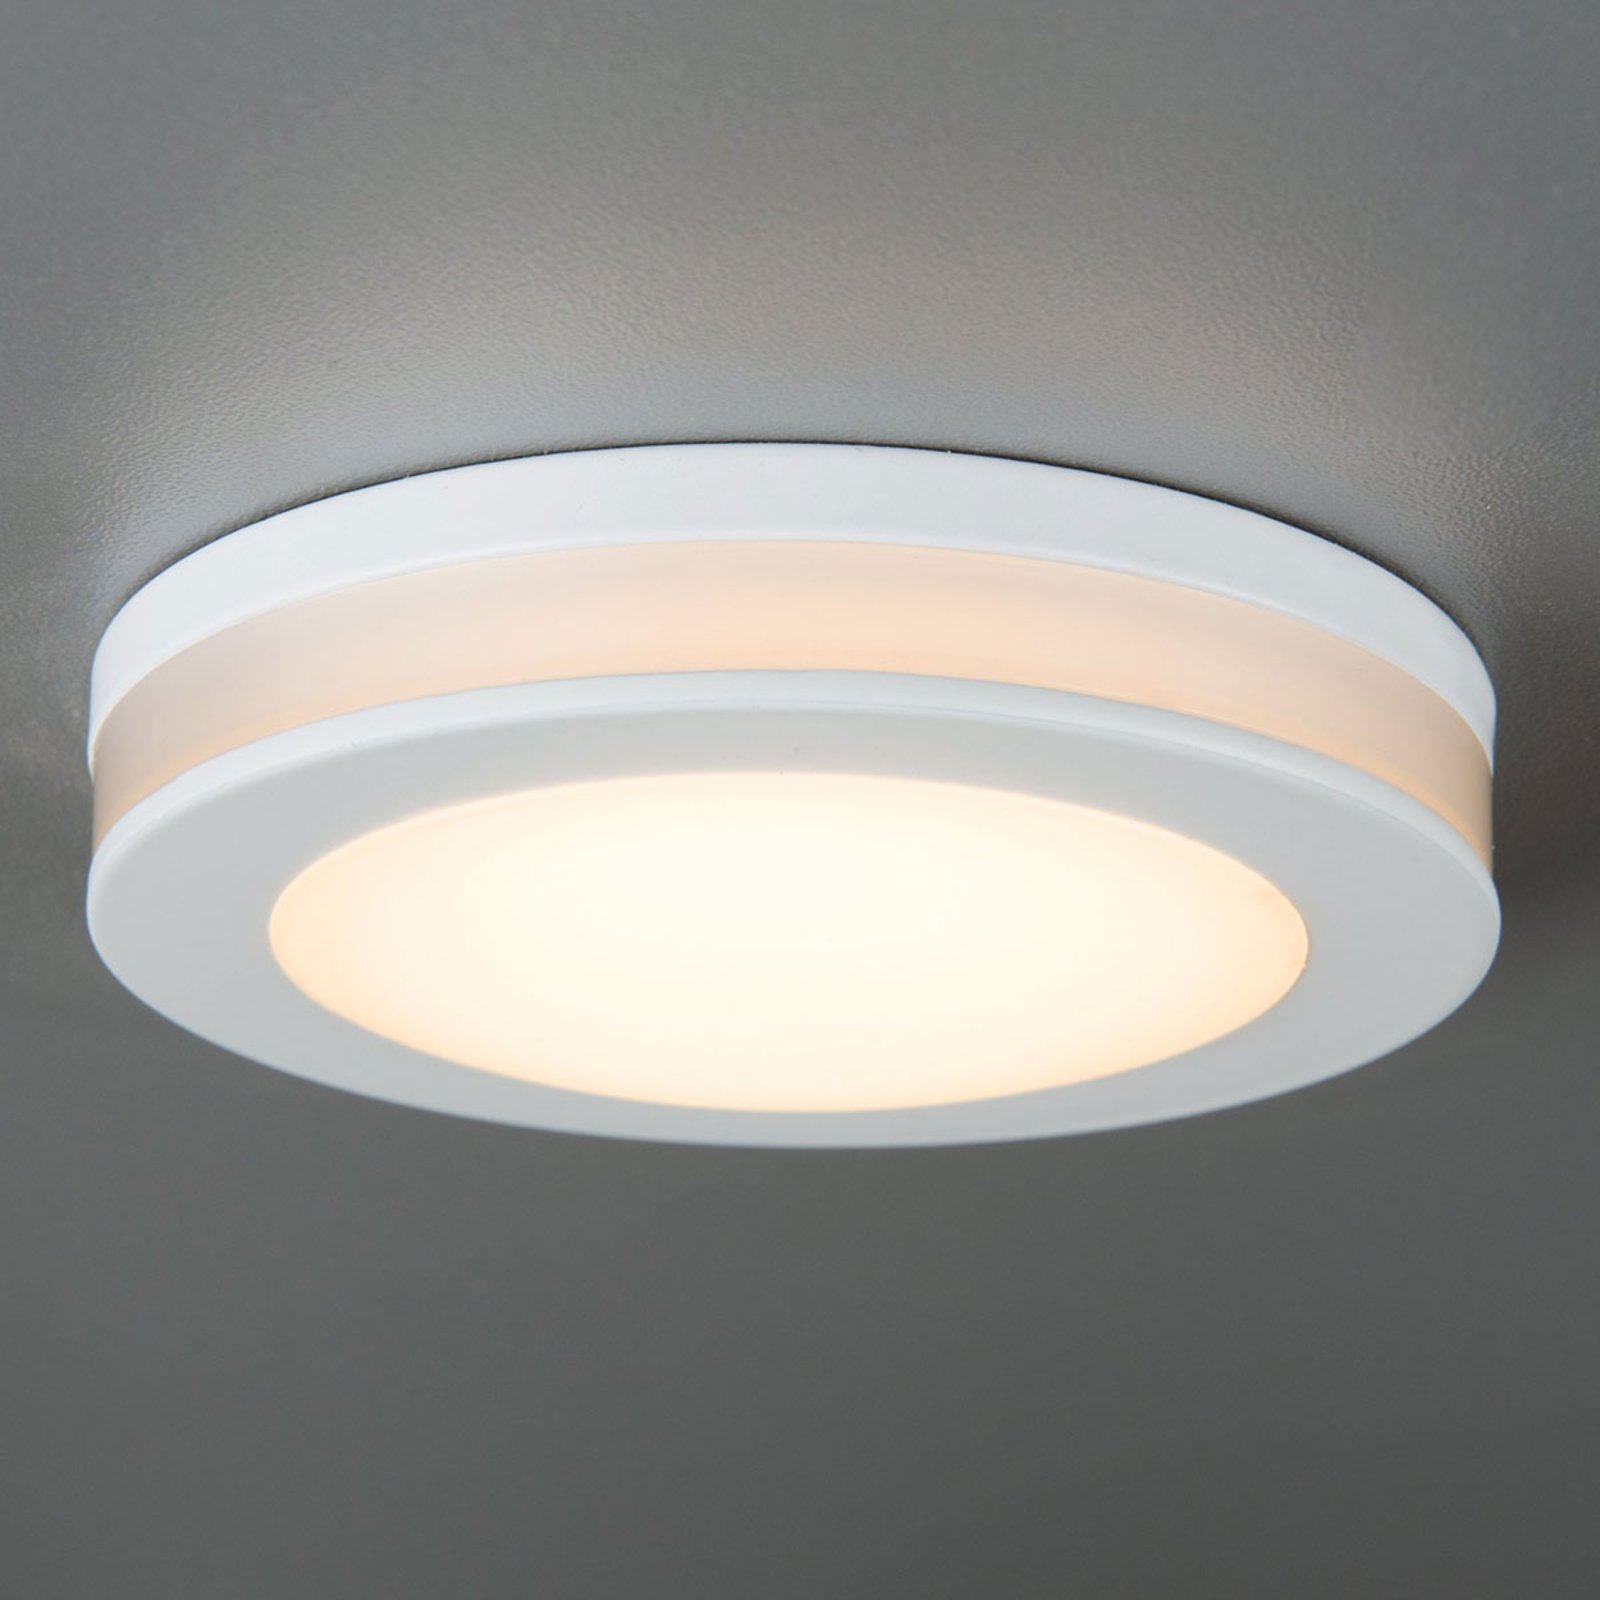 Artemis LED downlight 10 W white